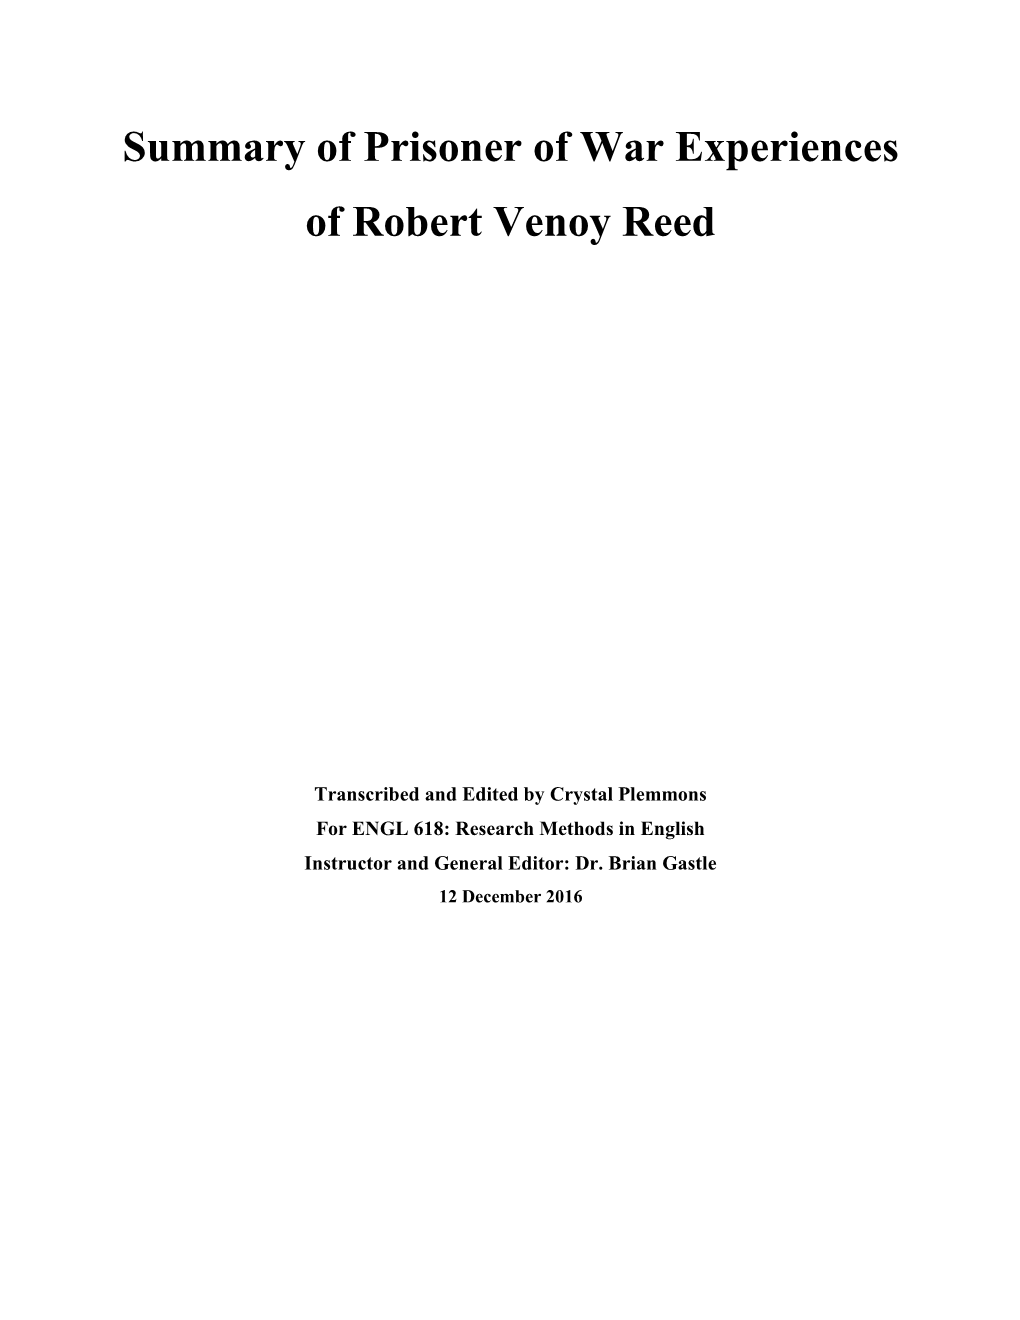 Summary of Prisoner of War Experiences of Robert Venoy Reed